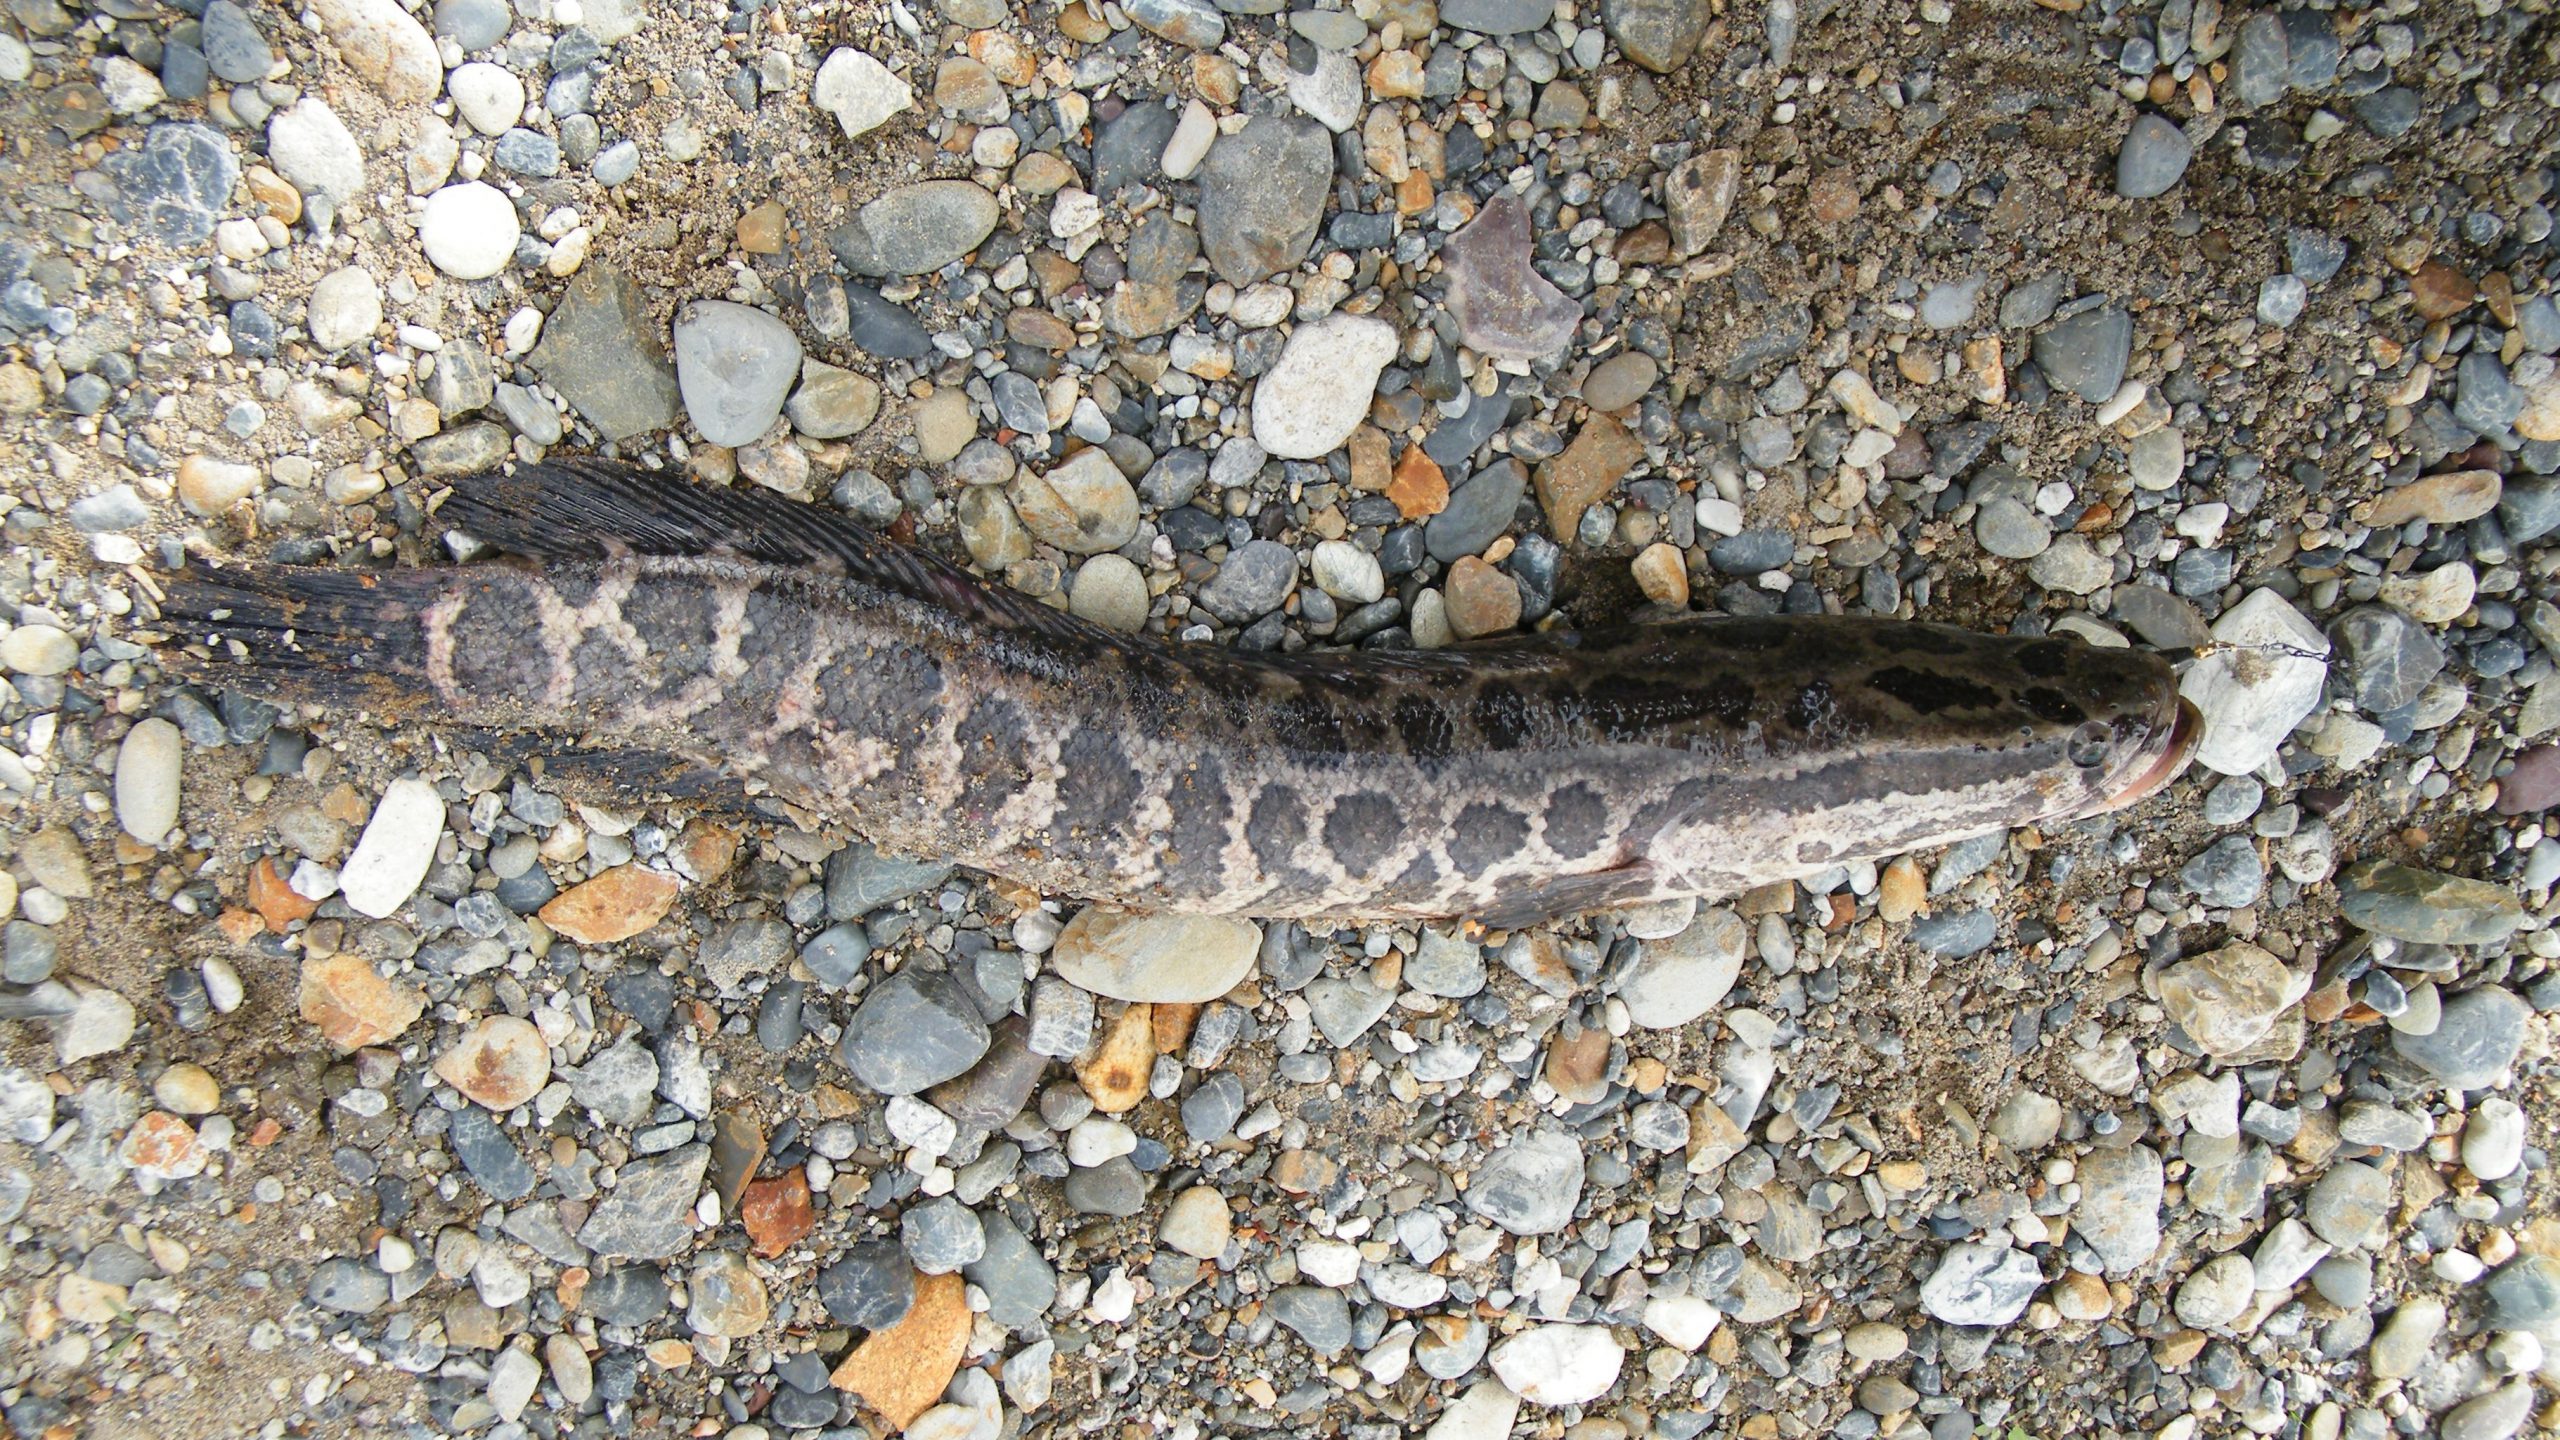 northern snakehead